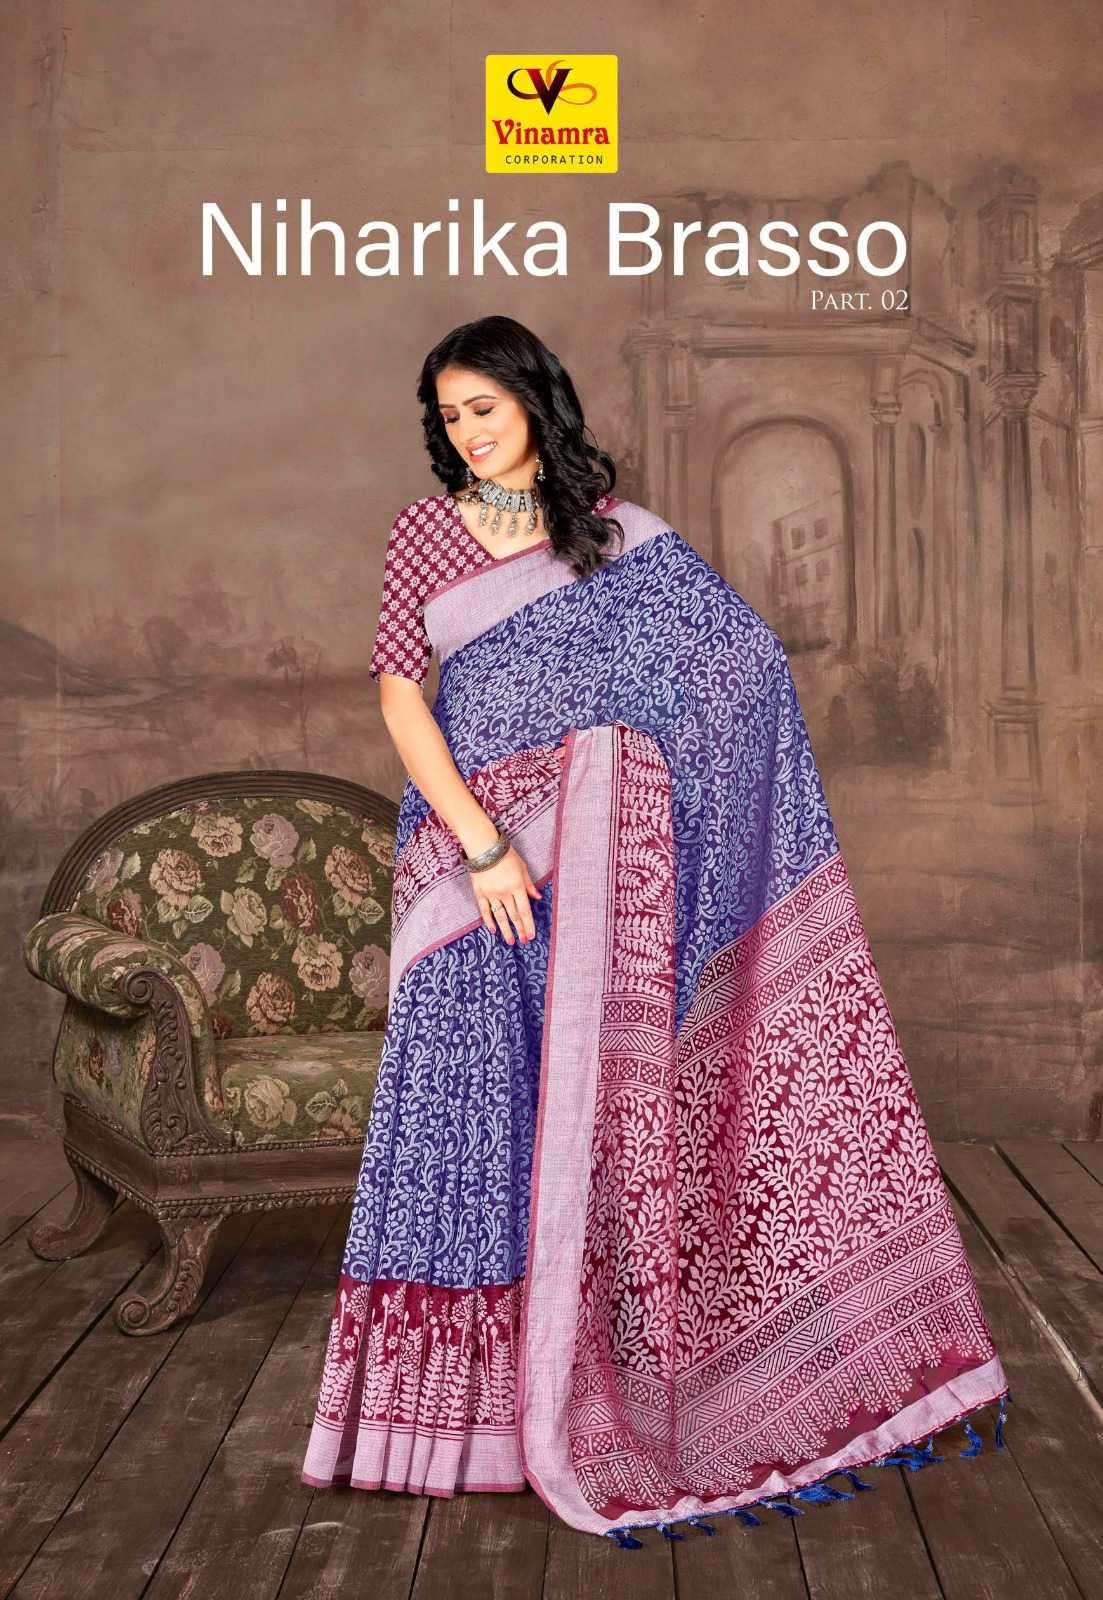 vinamra niharika brasso vol 2 series 09-16 cotton saree